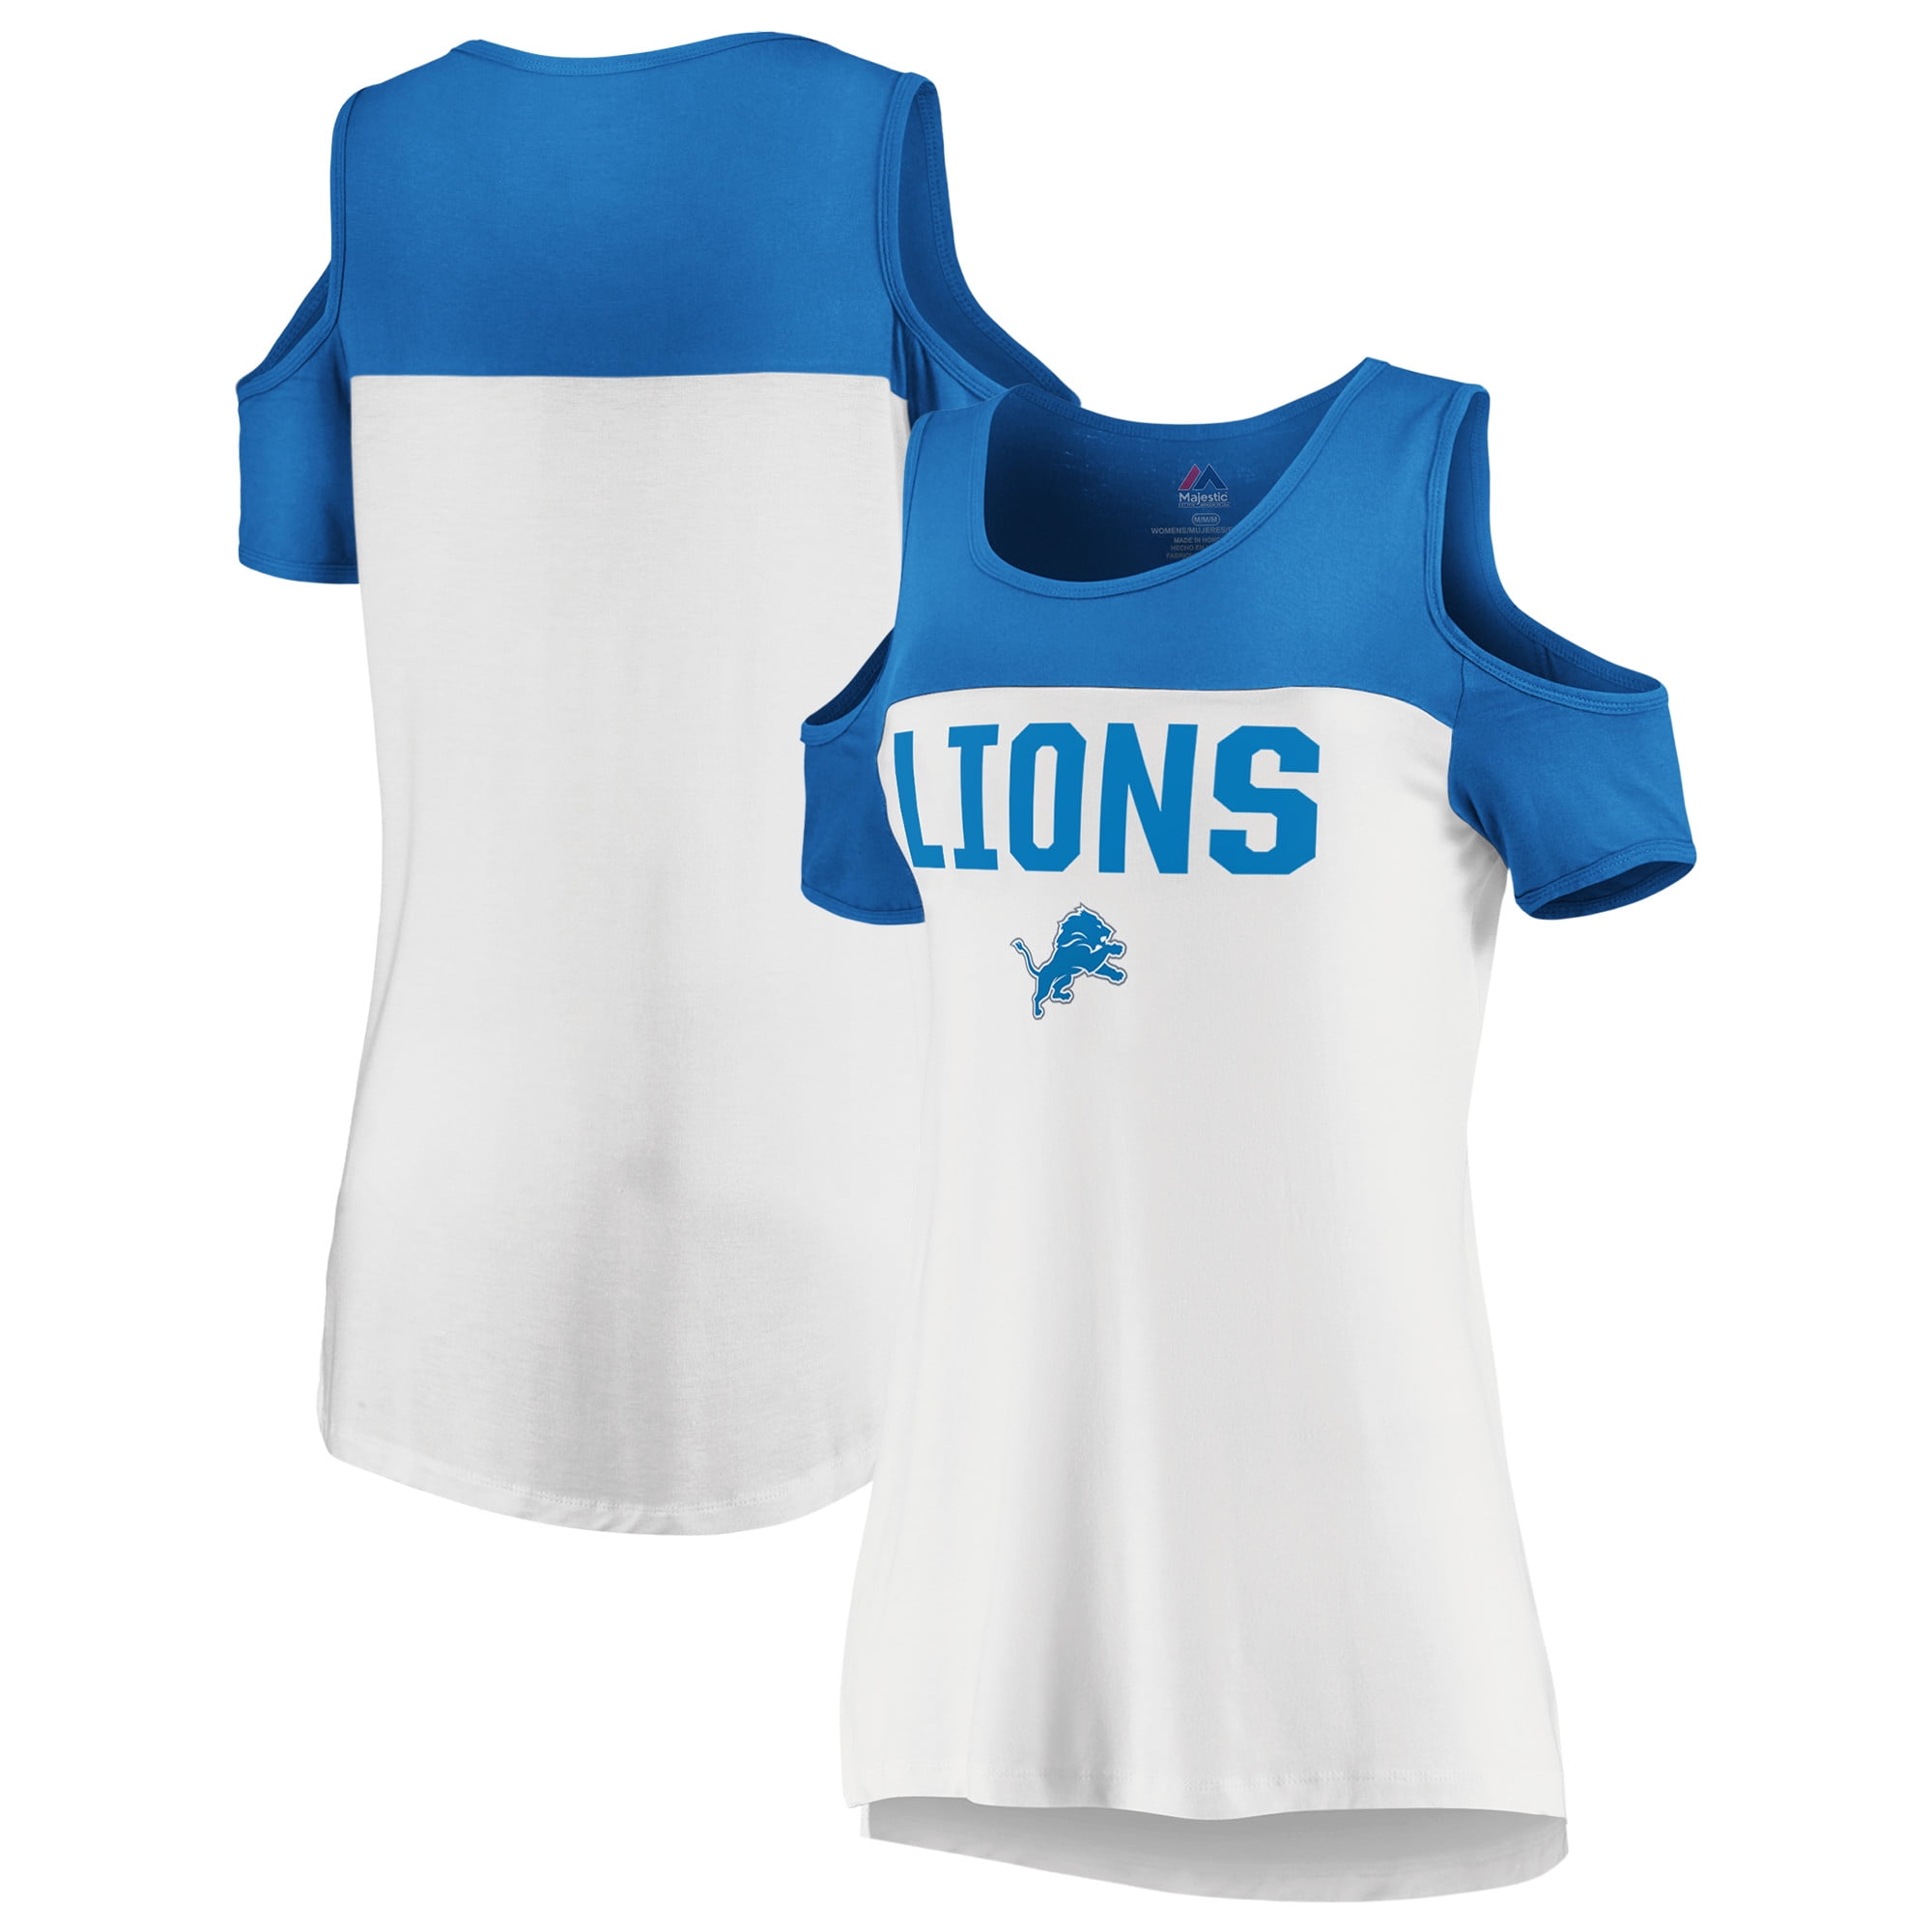 detroit lions womens shirts